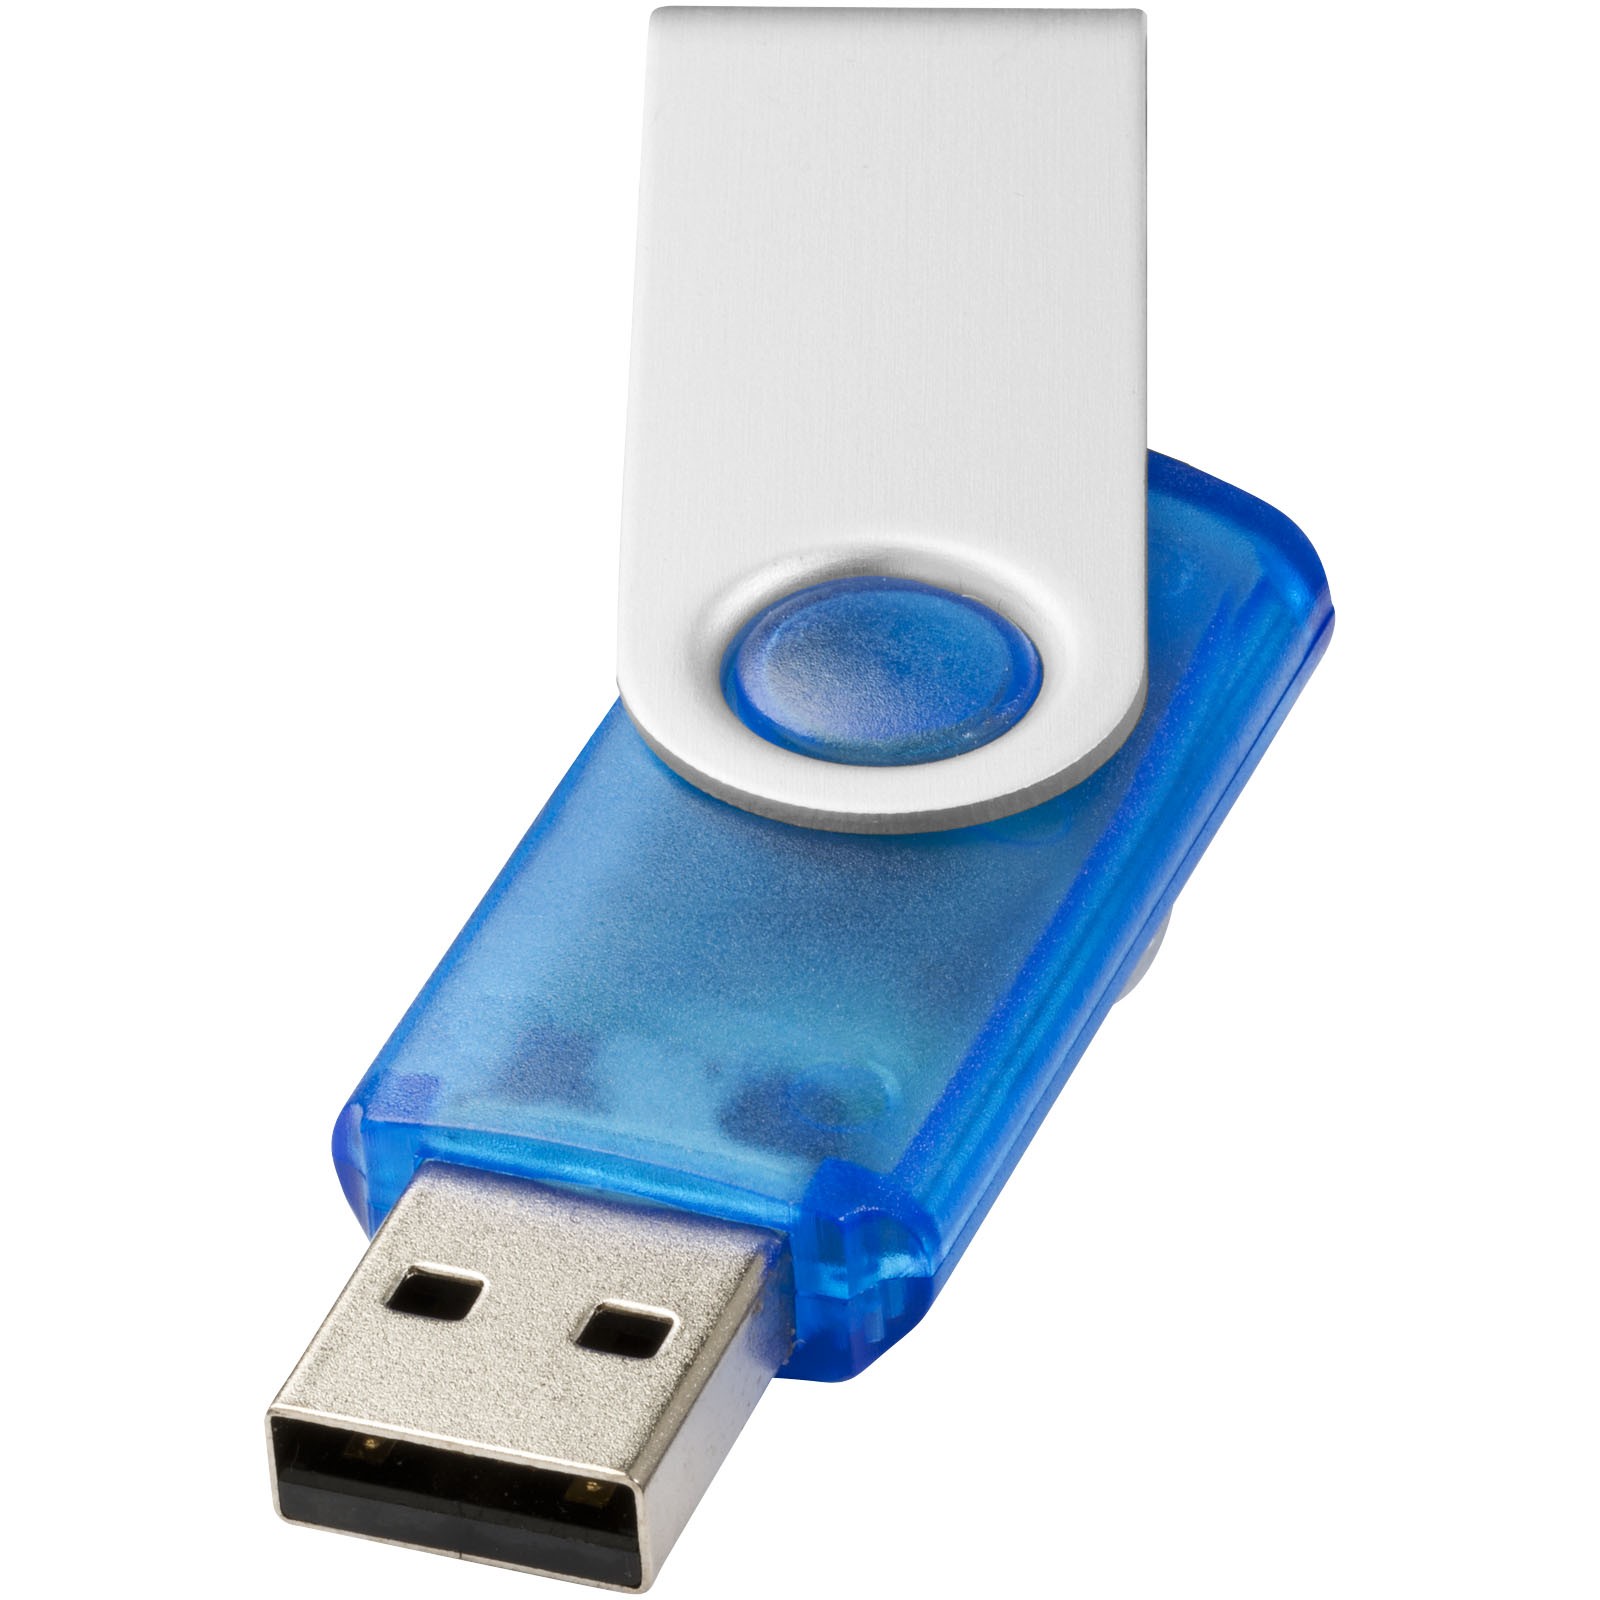 USB ključ Rotate-translucent 4GB - Transparent Blue / Silver